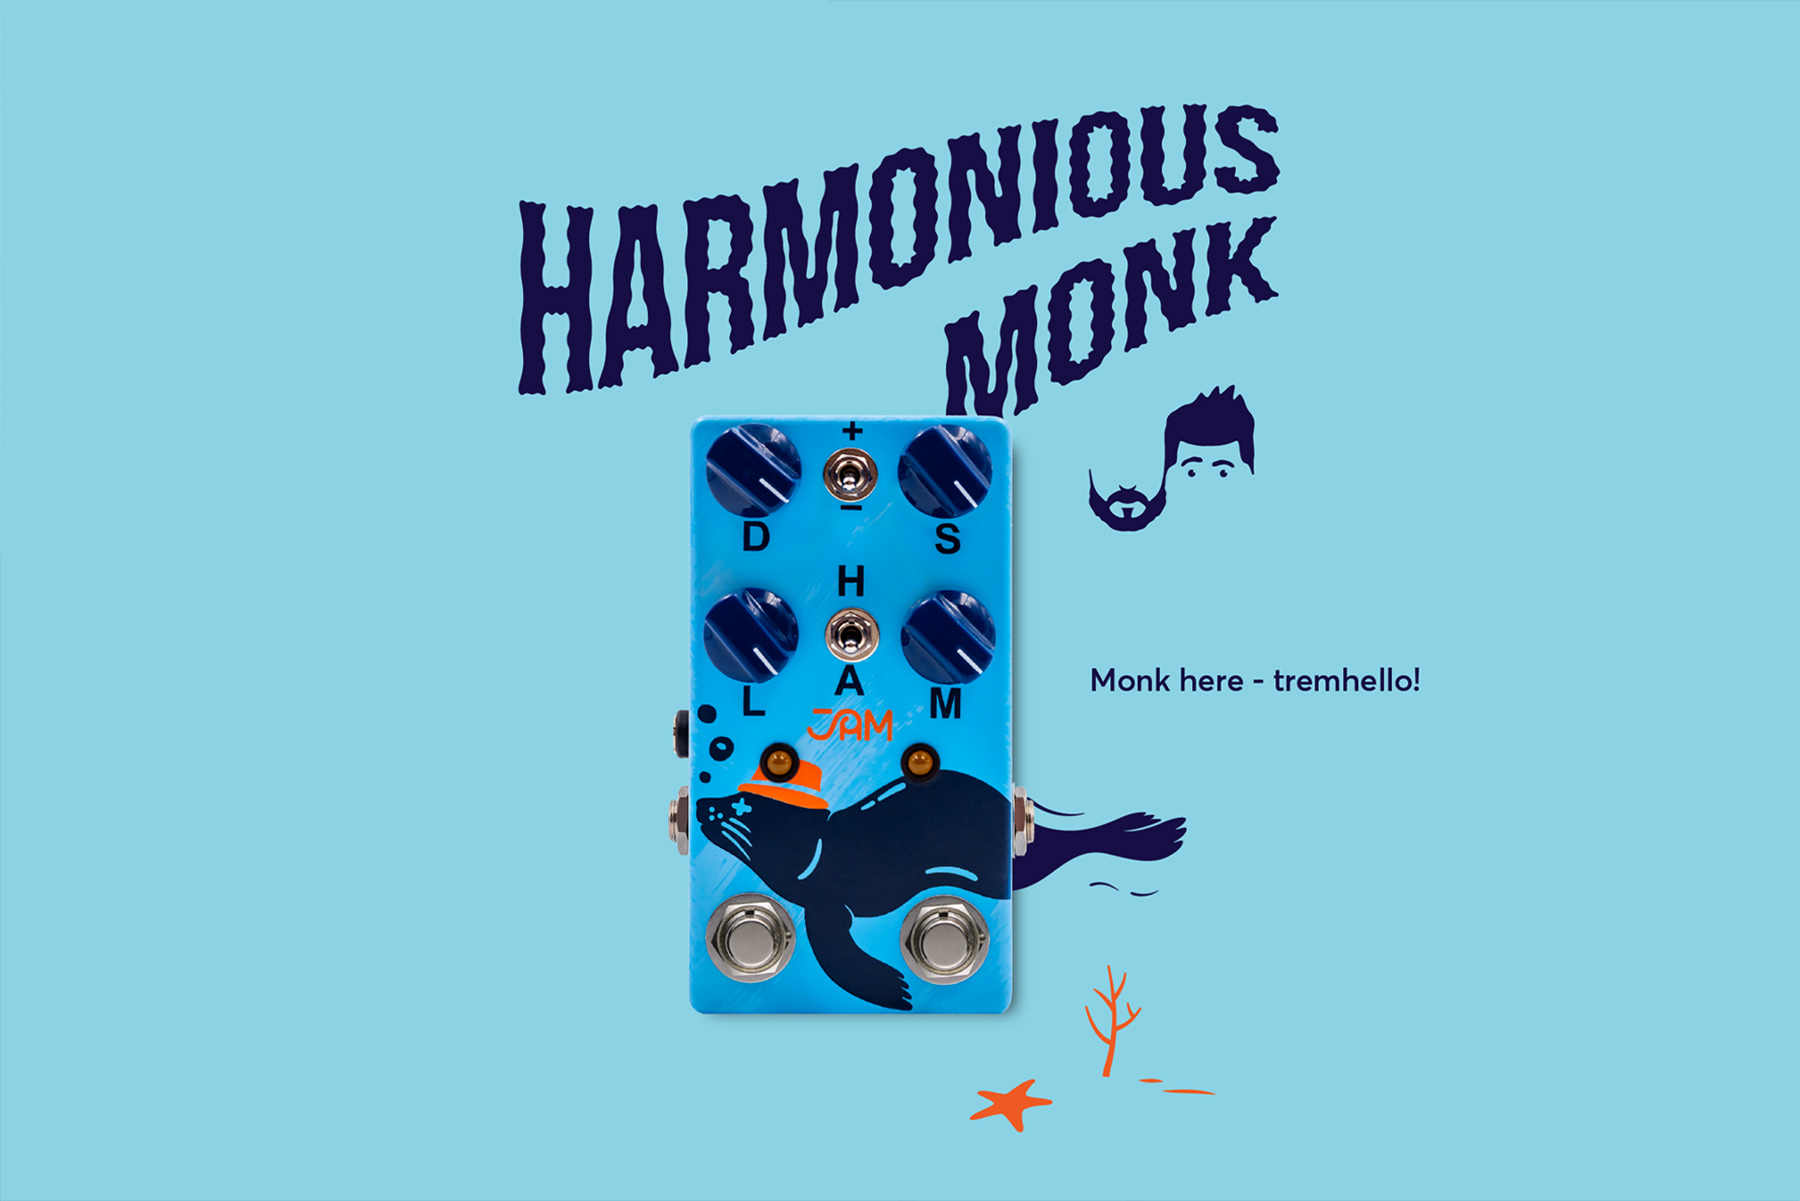 Harmonious Monk mk.1